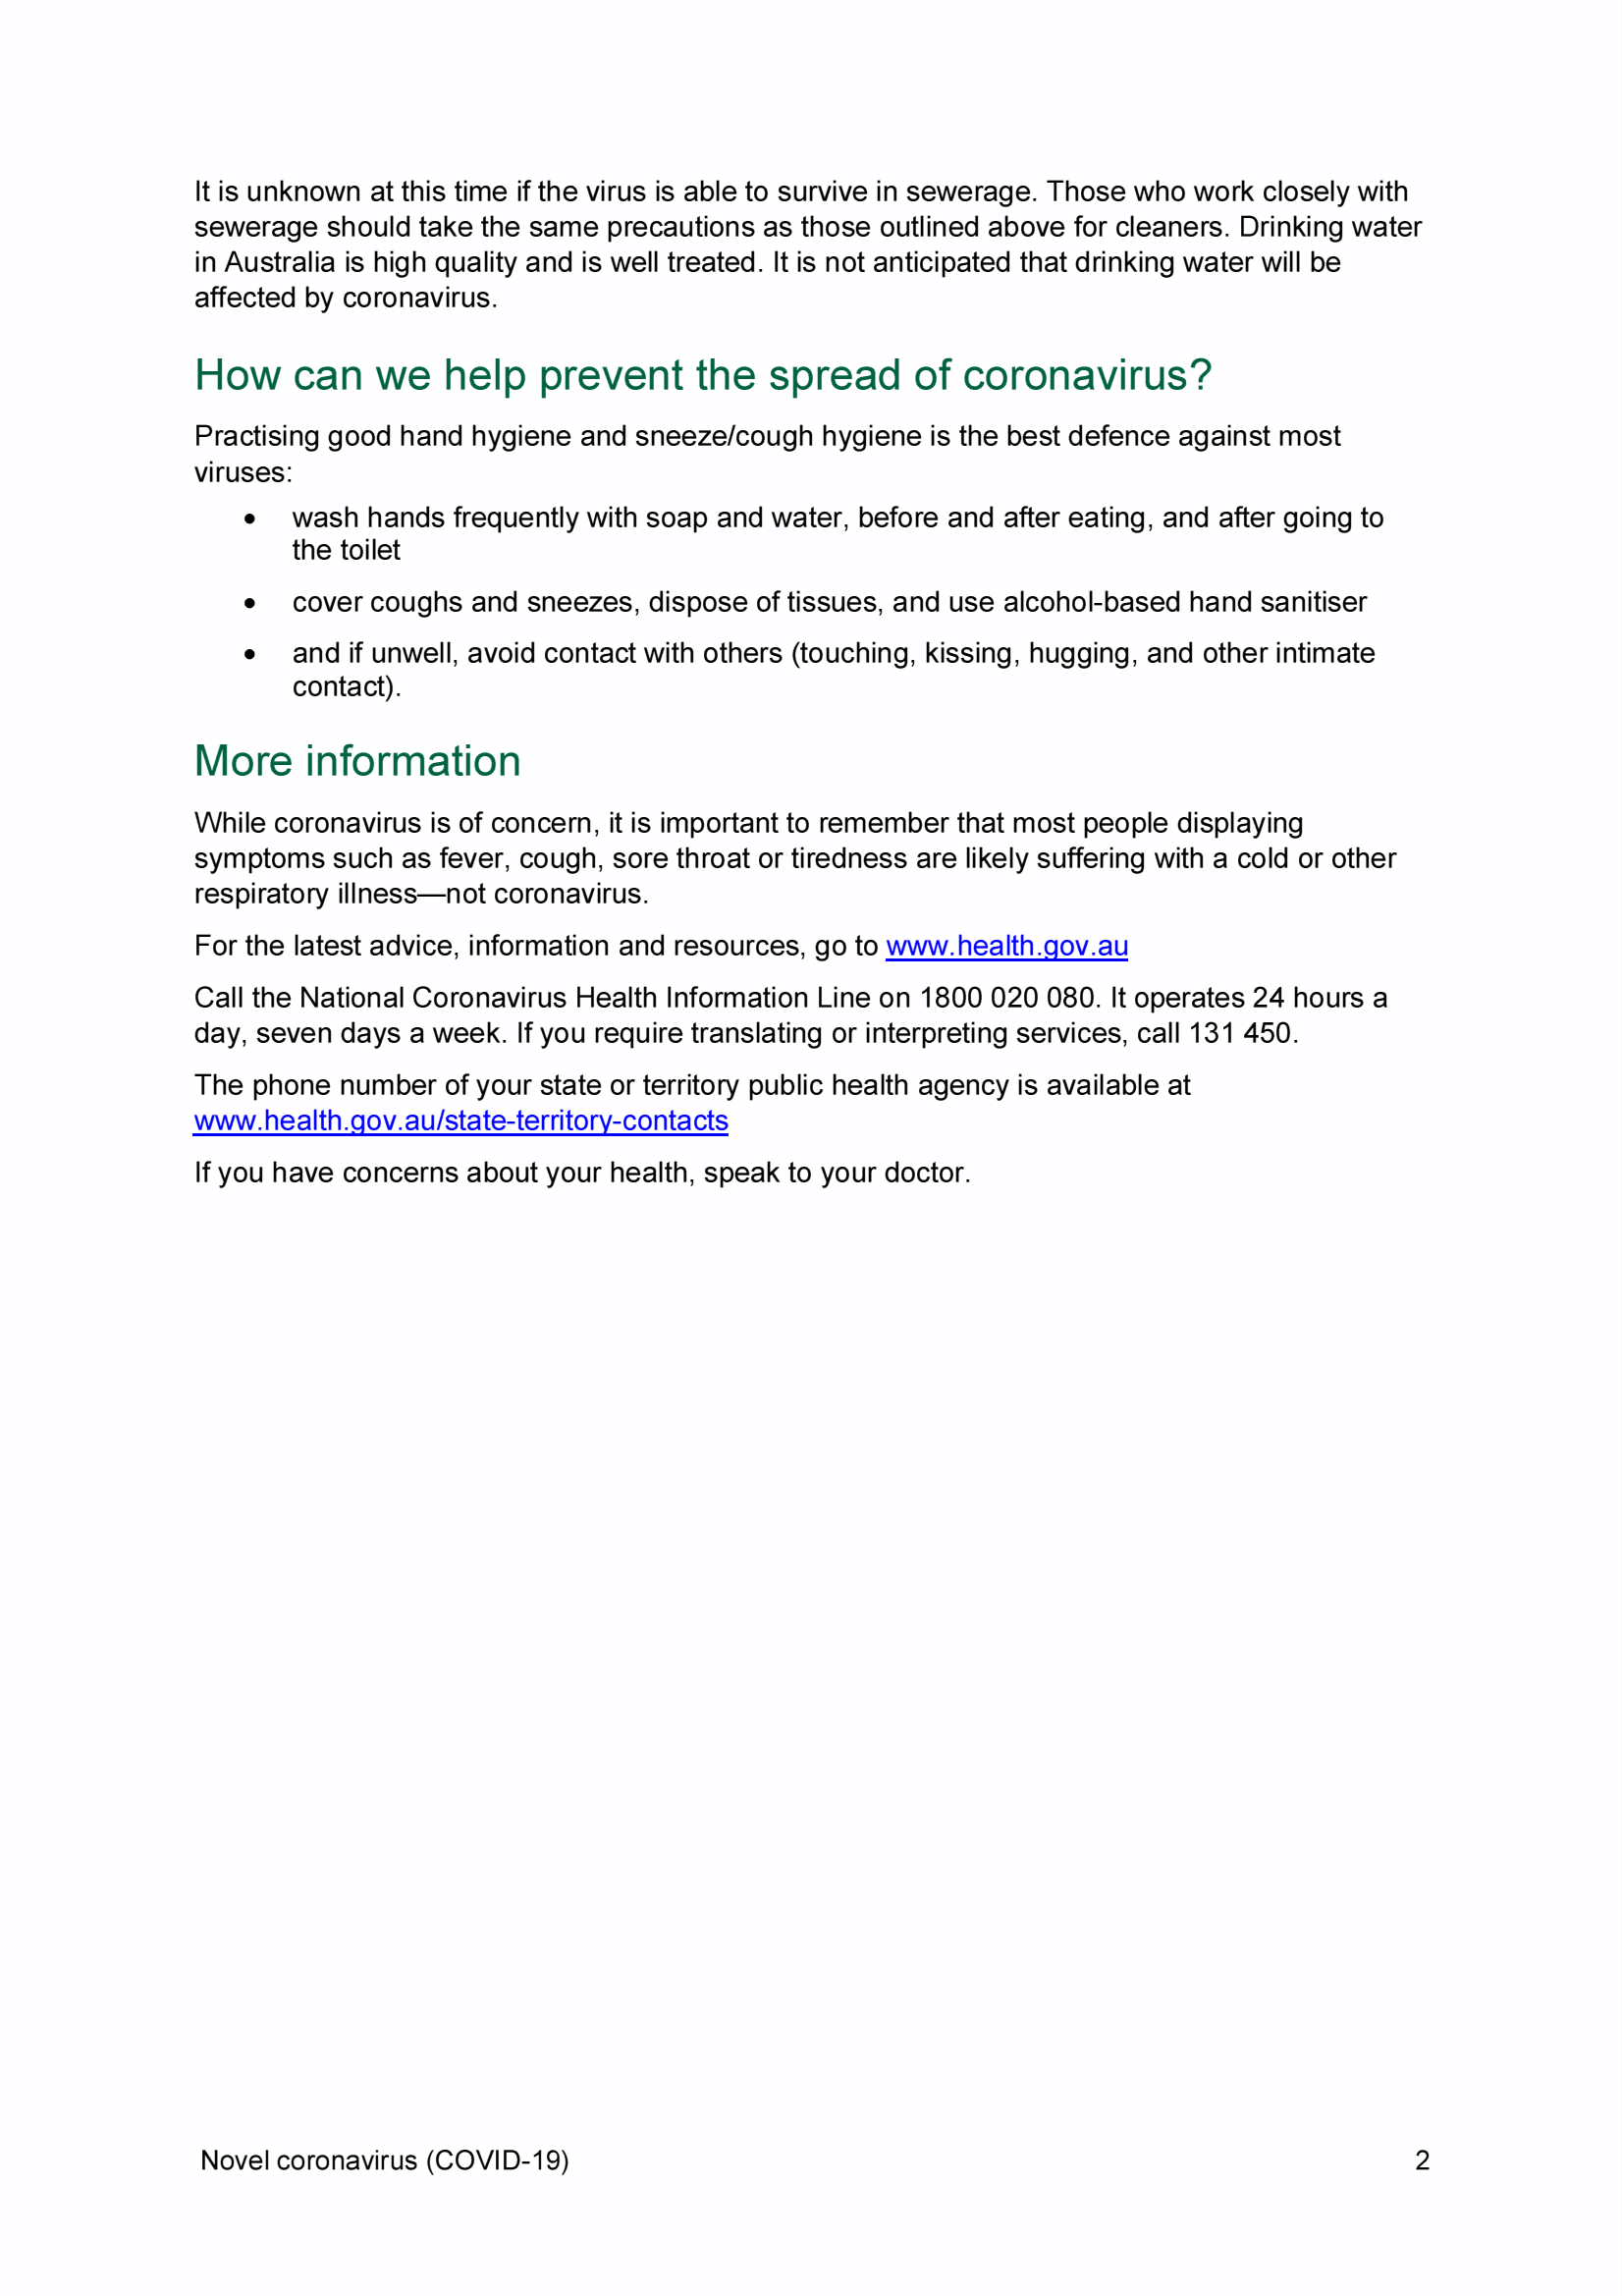 coronavirus-covid-19-information-for-employers_2.jpg